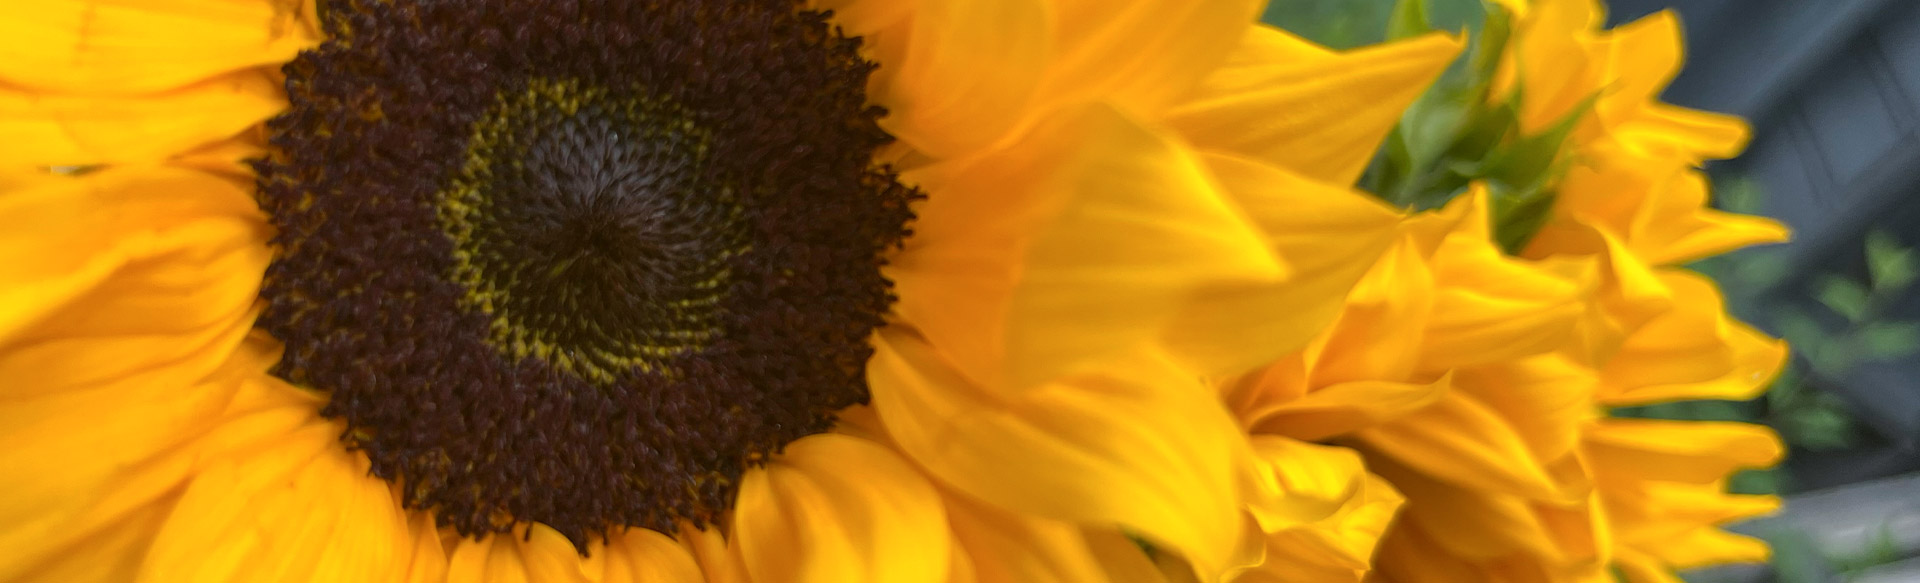 wholesale-sunflowers-online.jpg